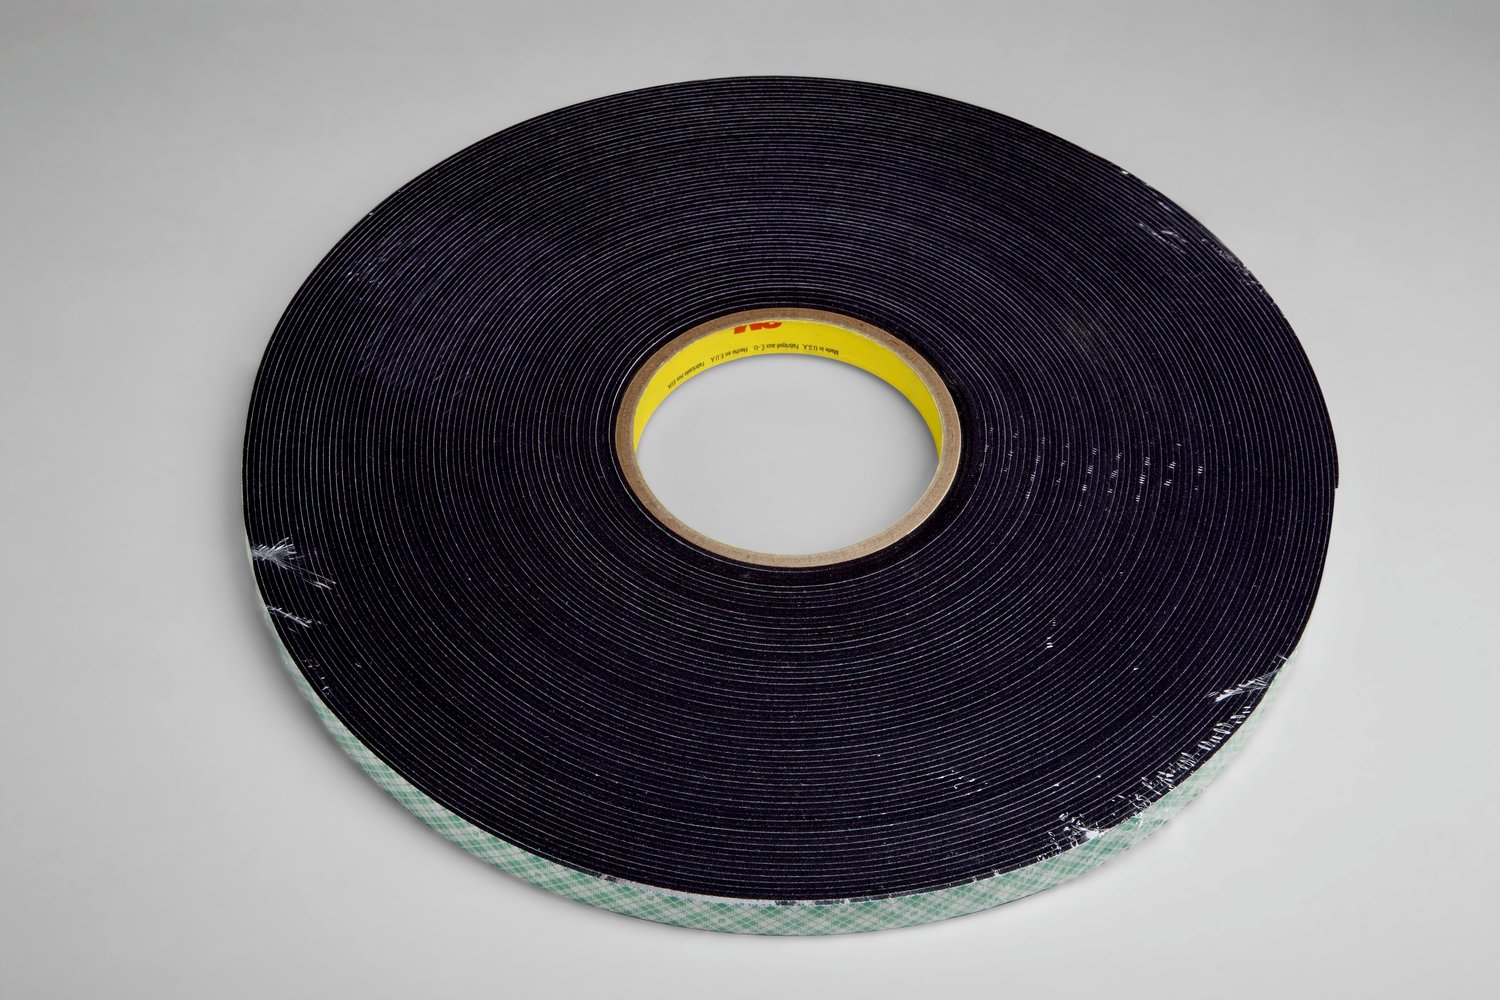 7000123323 - 3M Double Coated Urethane Foam Tape 4056, Black, 3/4 in x 36 yd, 62
mil, 12 rolls per case